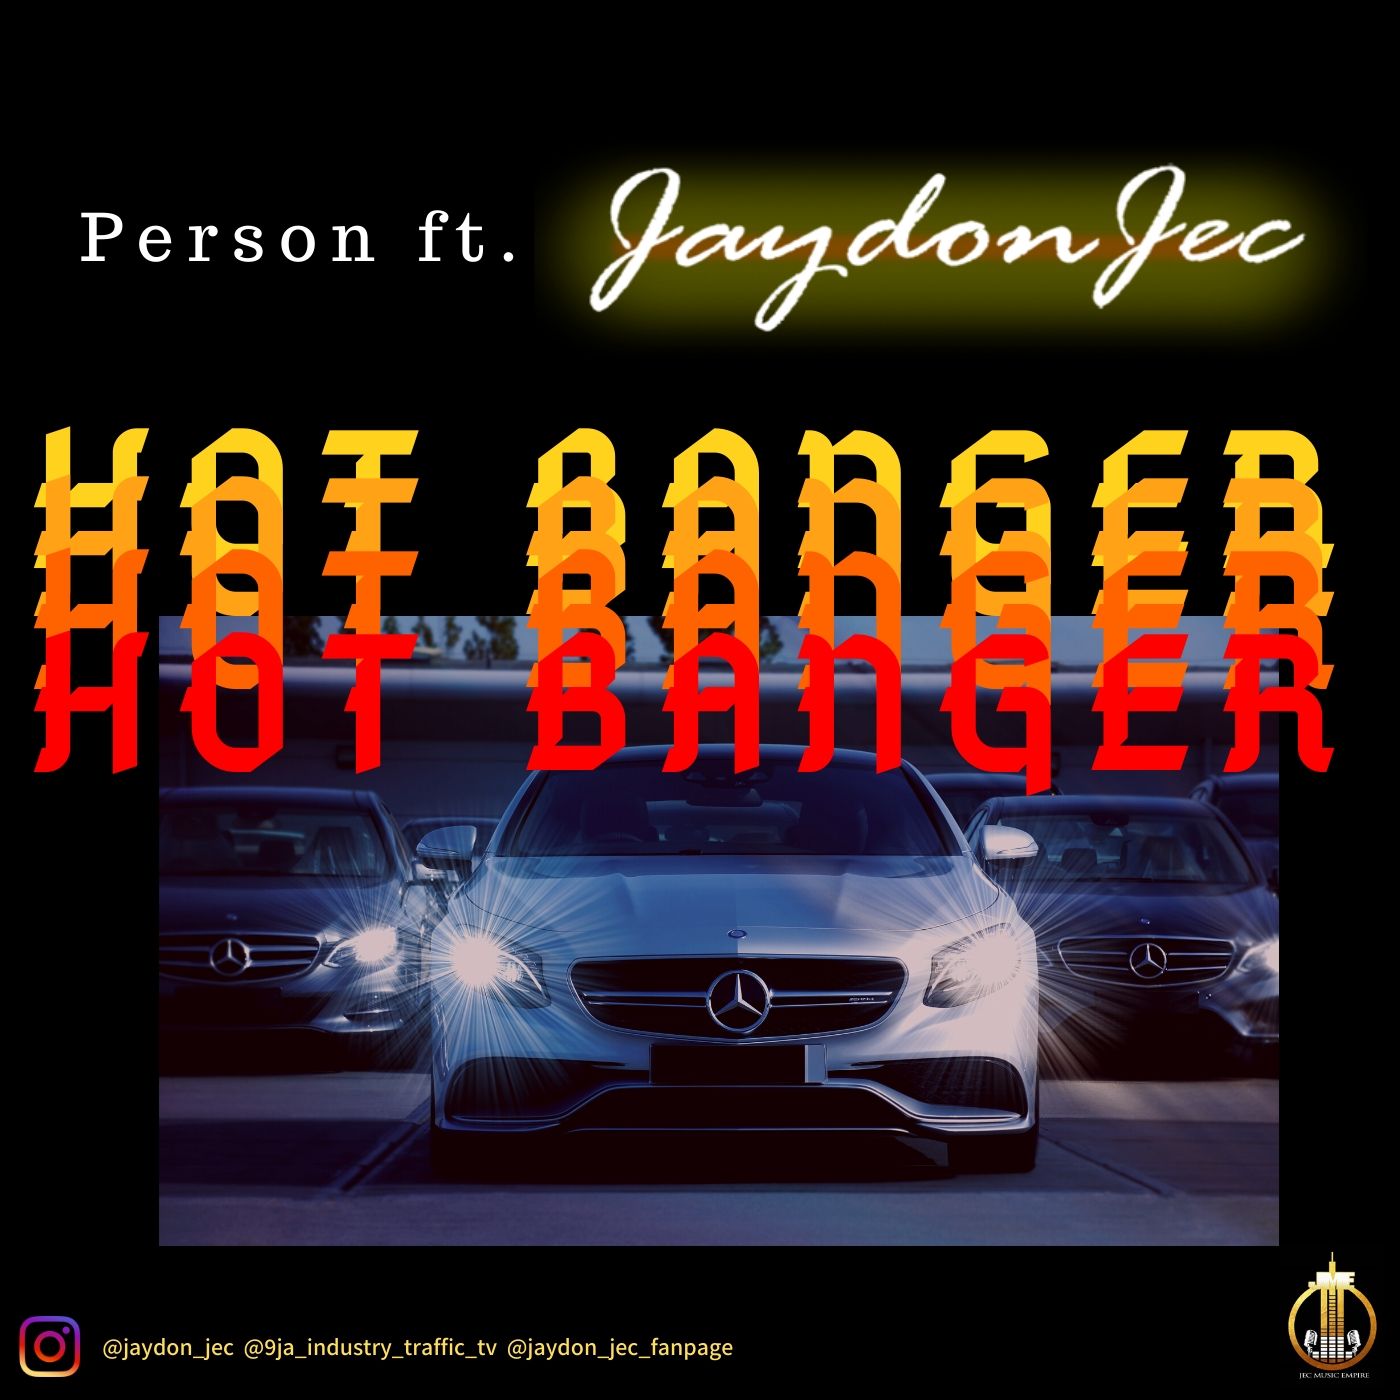 Hot Banger by Jaydon Jec